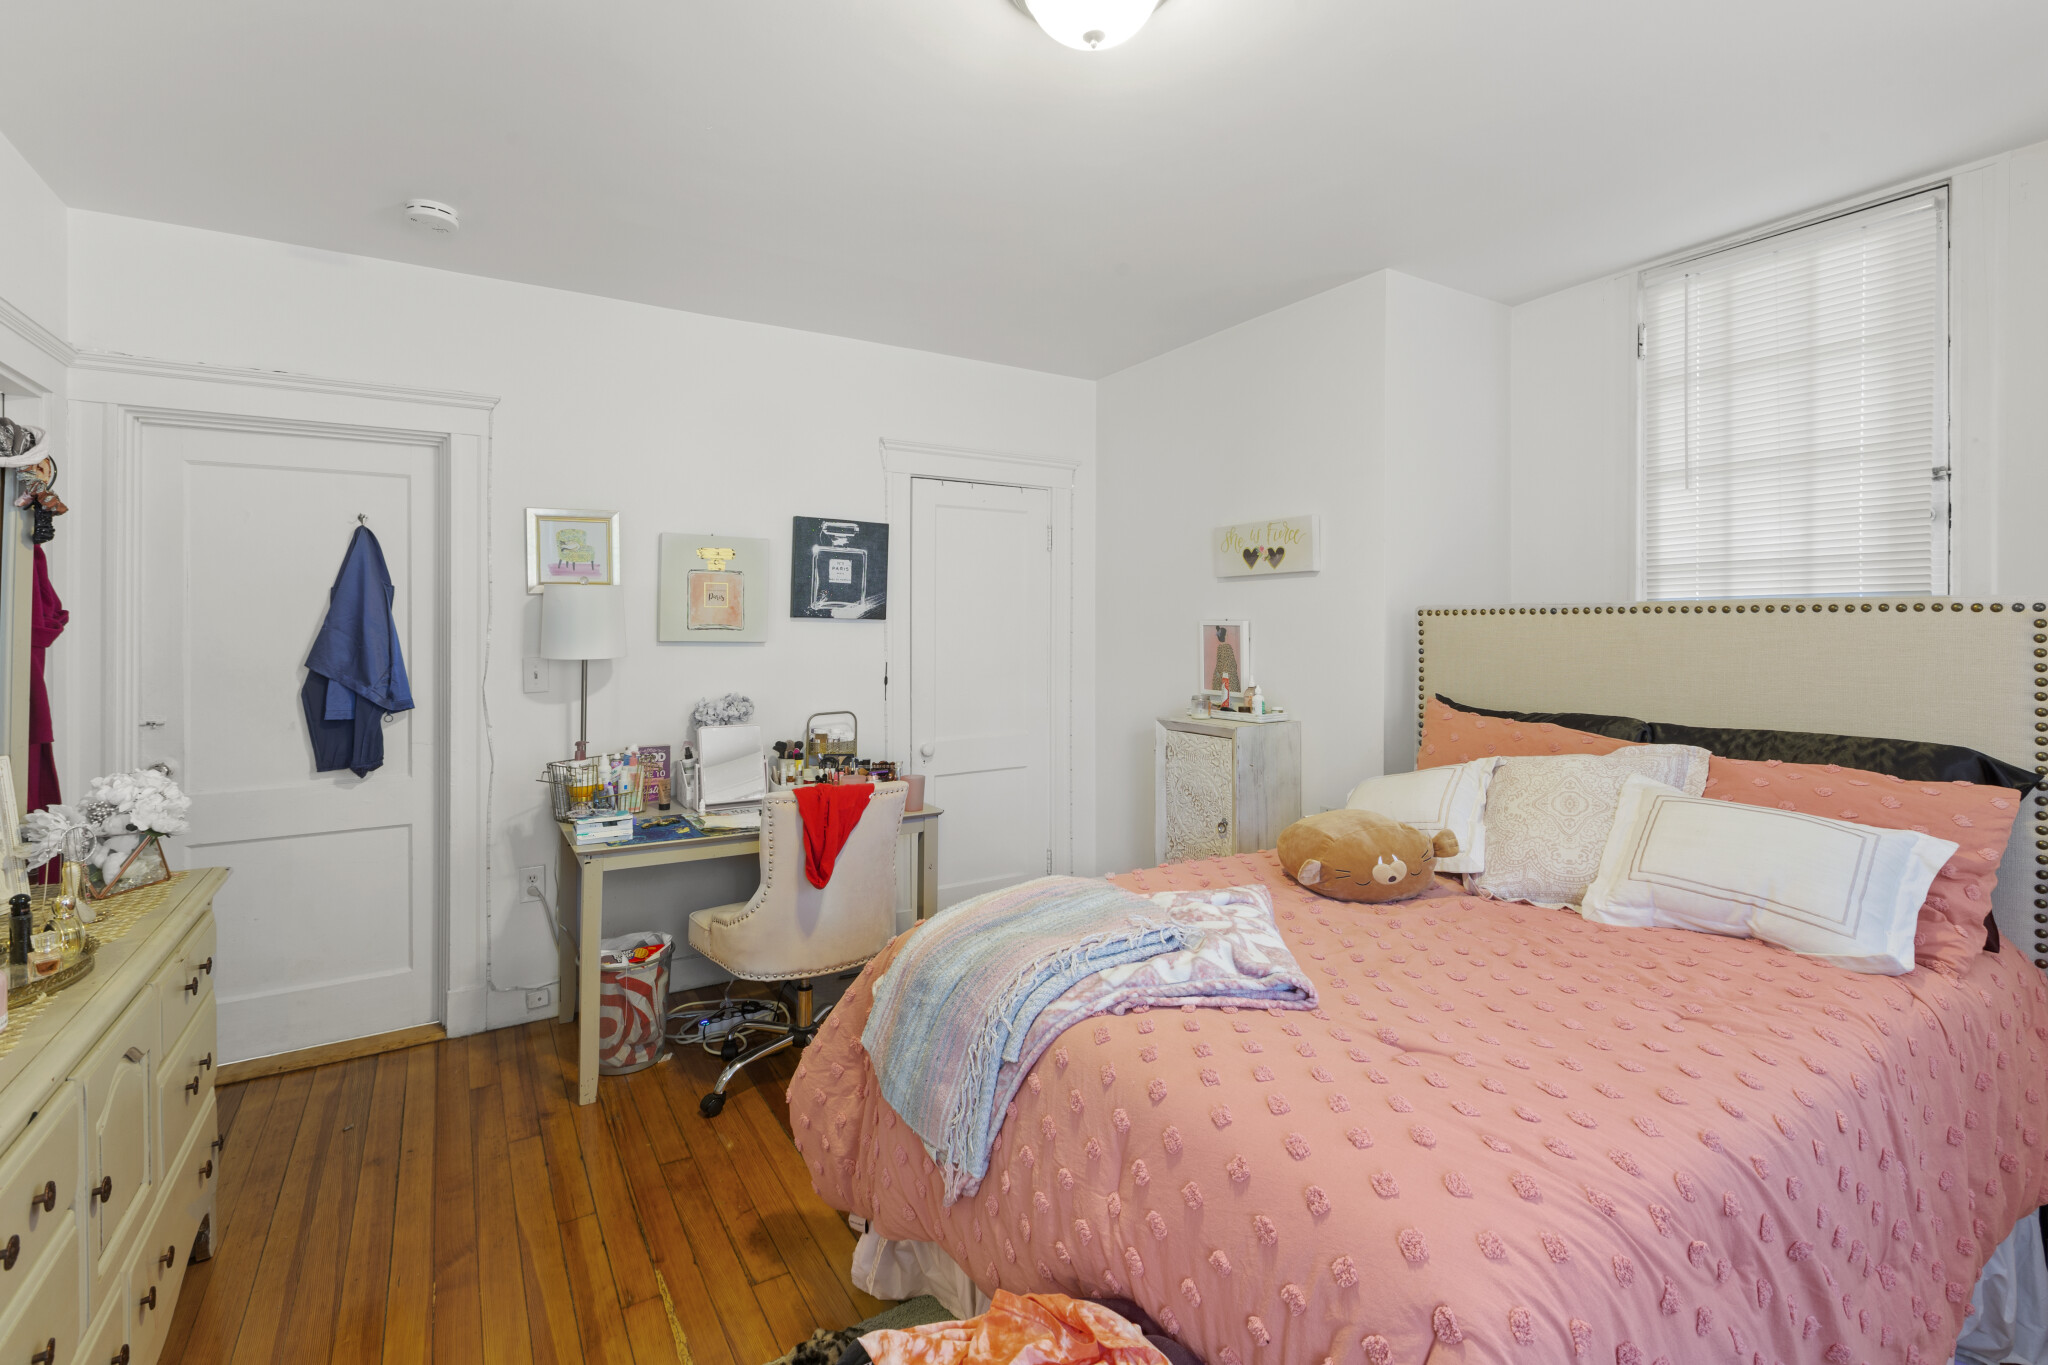 Photos of apartment on Commonwealth,Boston MA 02135